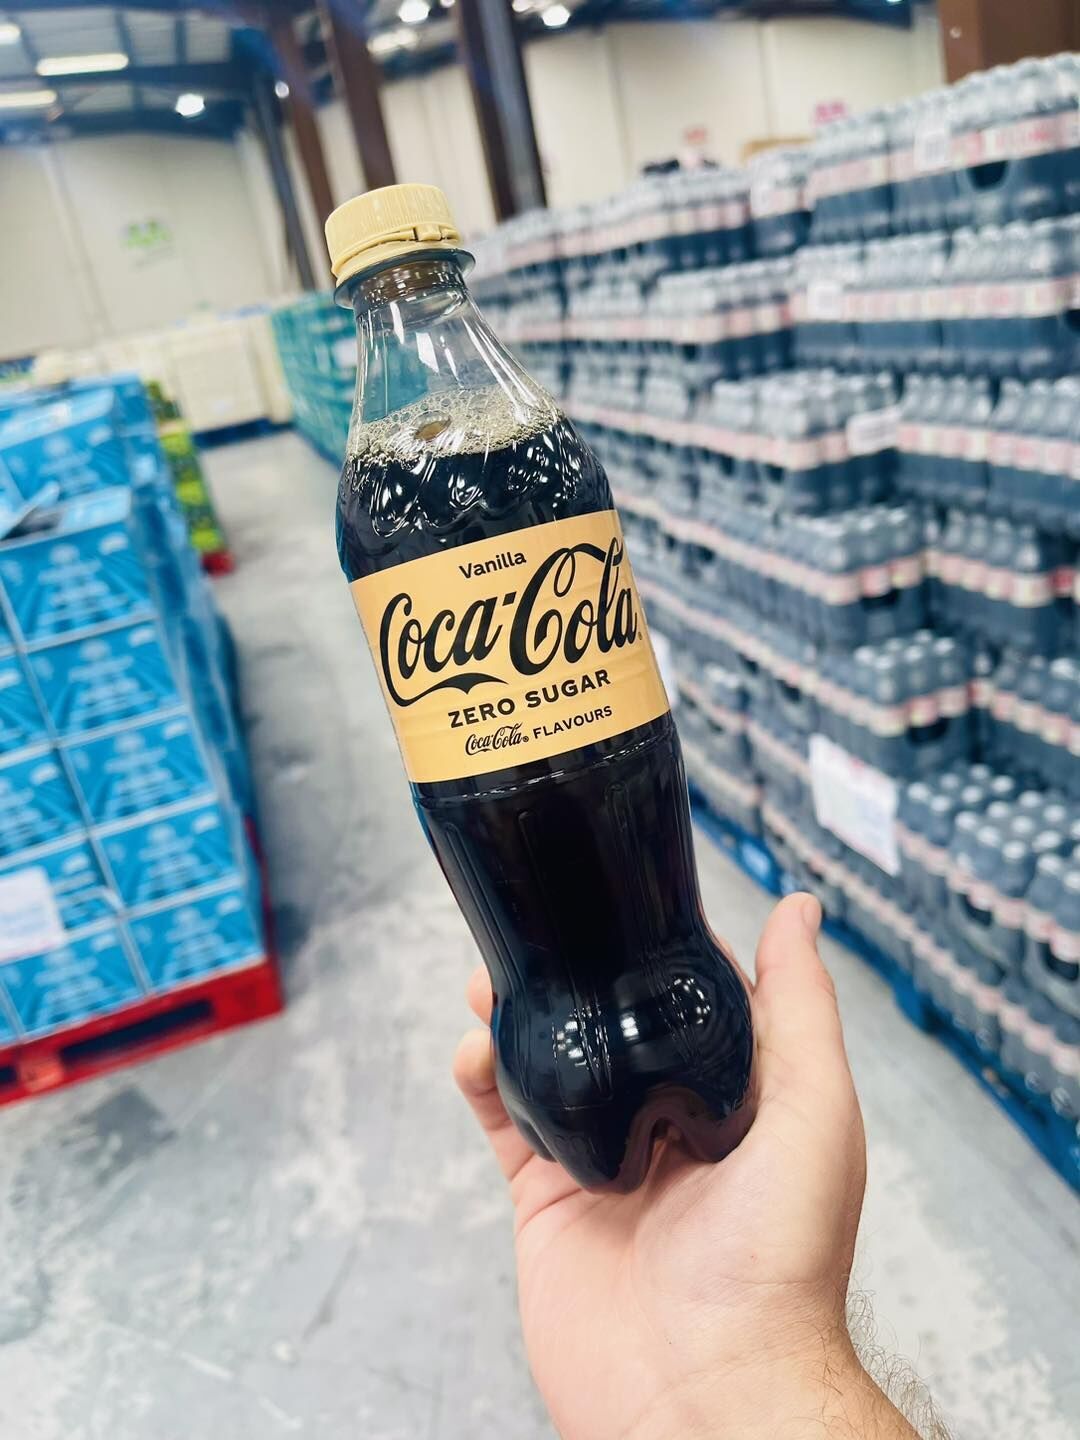 Wholesale stock of Coca Cola 0.5L PET